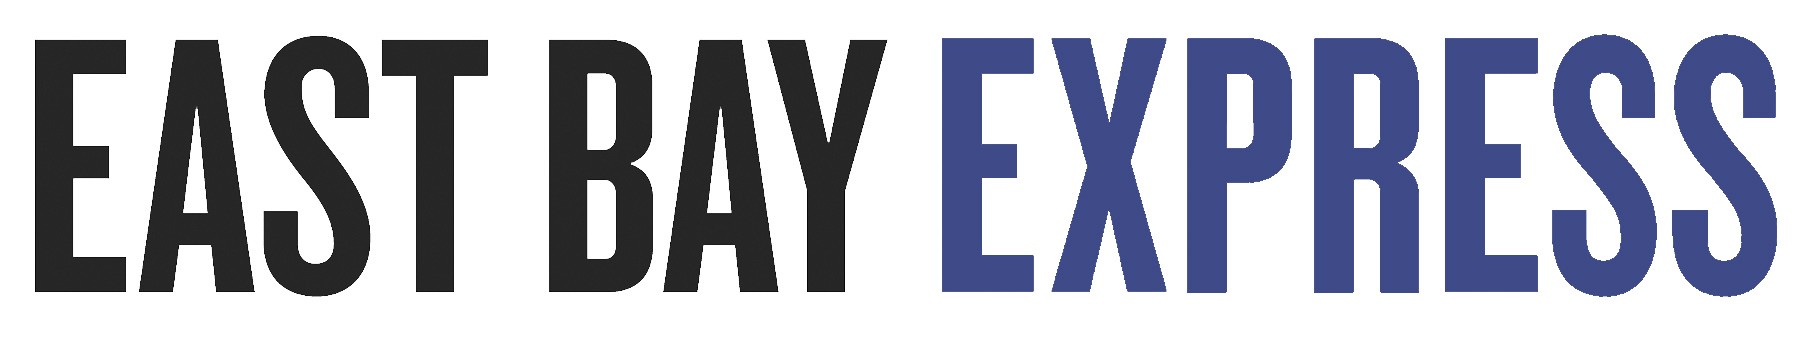 east bay express logo.jpg